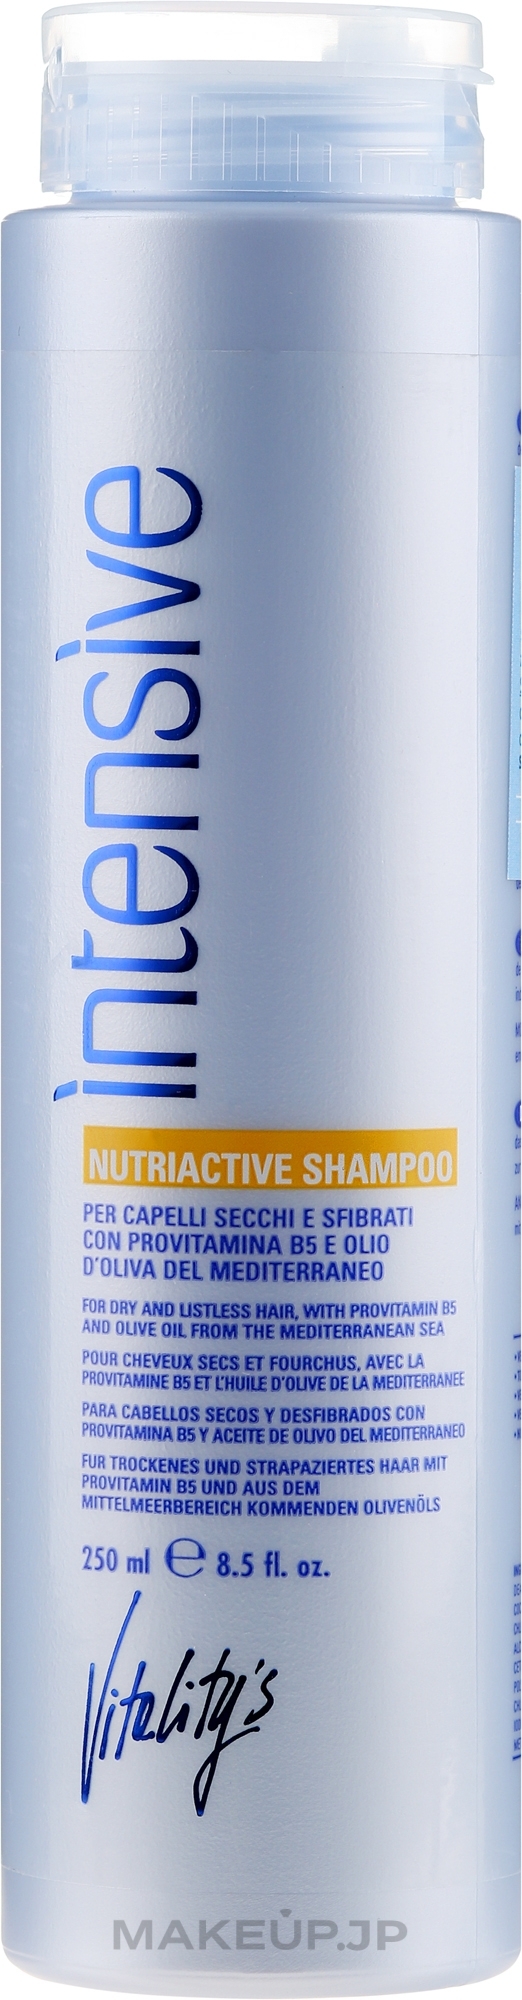 Nourishing Dry & Damaged Hair Shampoo - Vitality's Intensive Nutriactive Shampoo — photo 250 ml